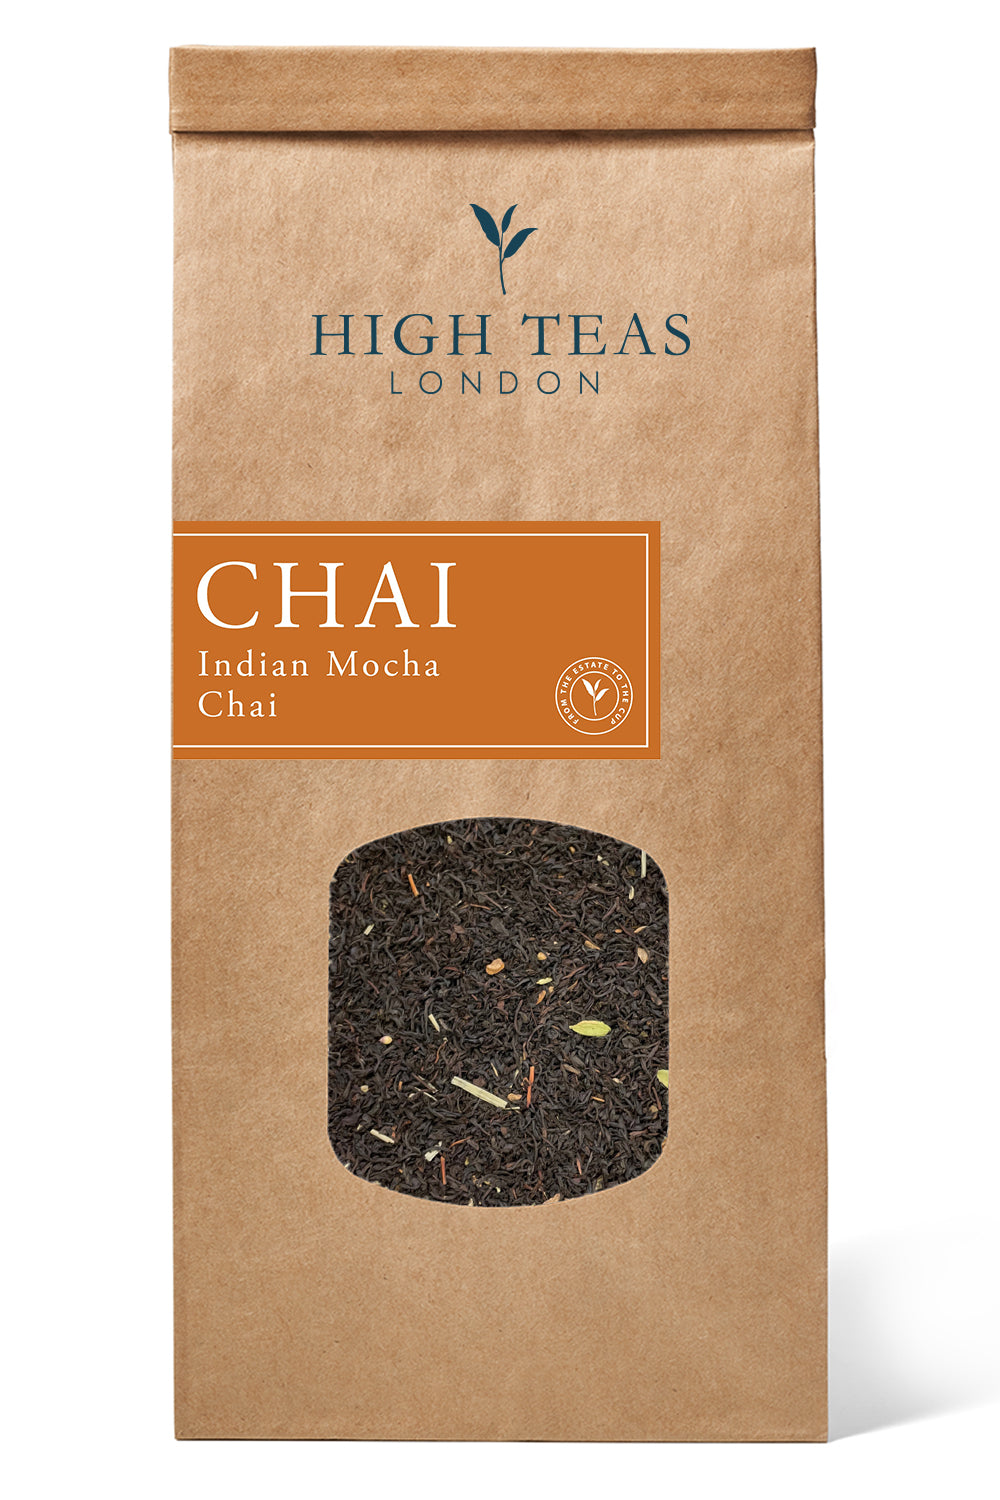 Indian Mocha Chai-250g-Loose Leaf Tea-High Teas